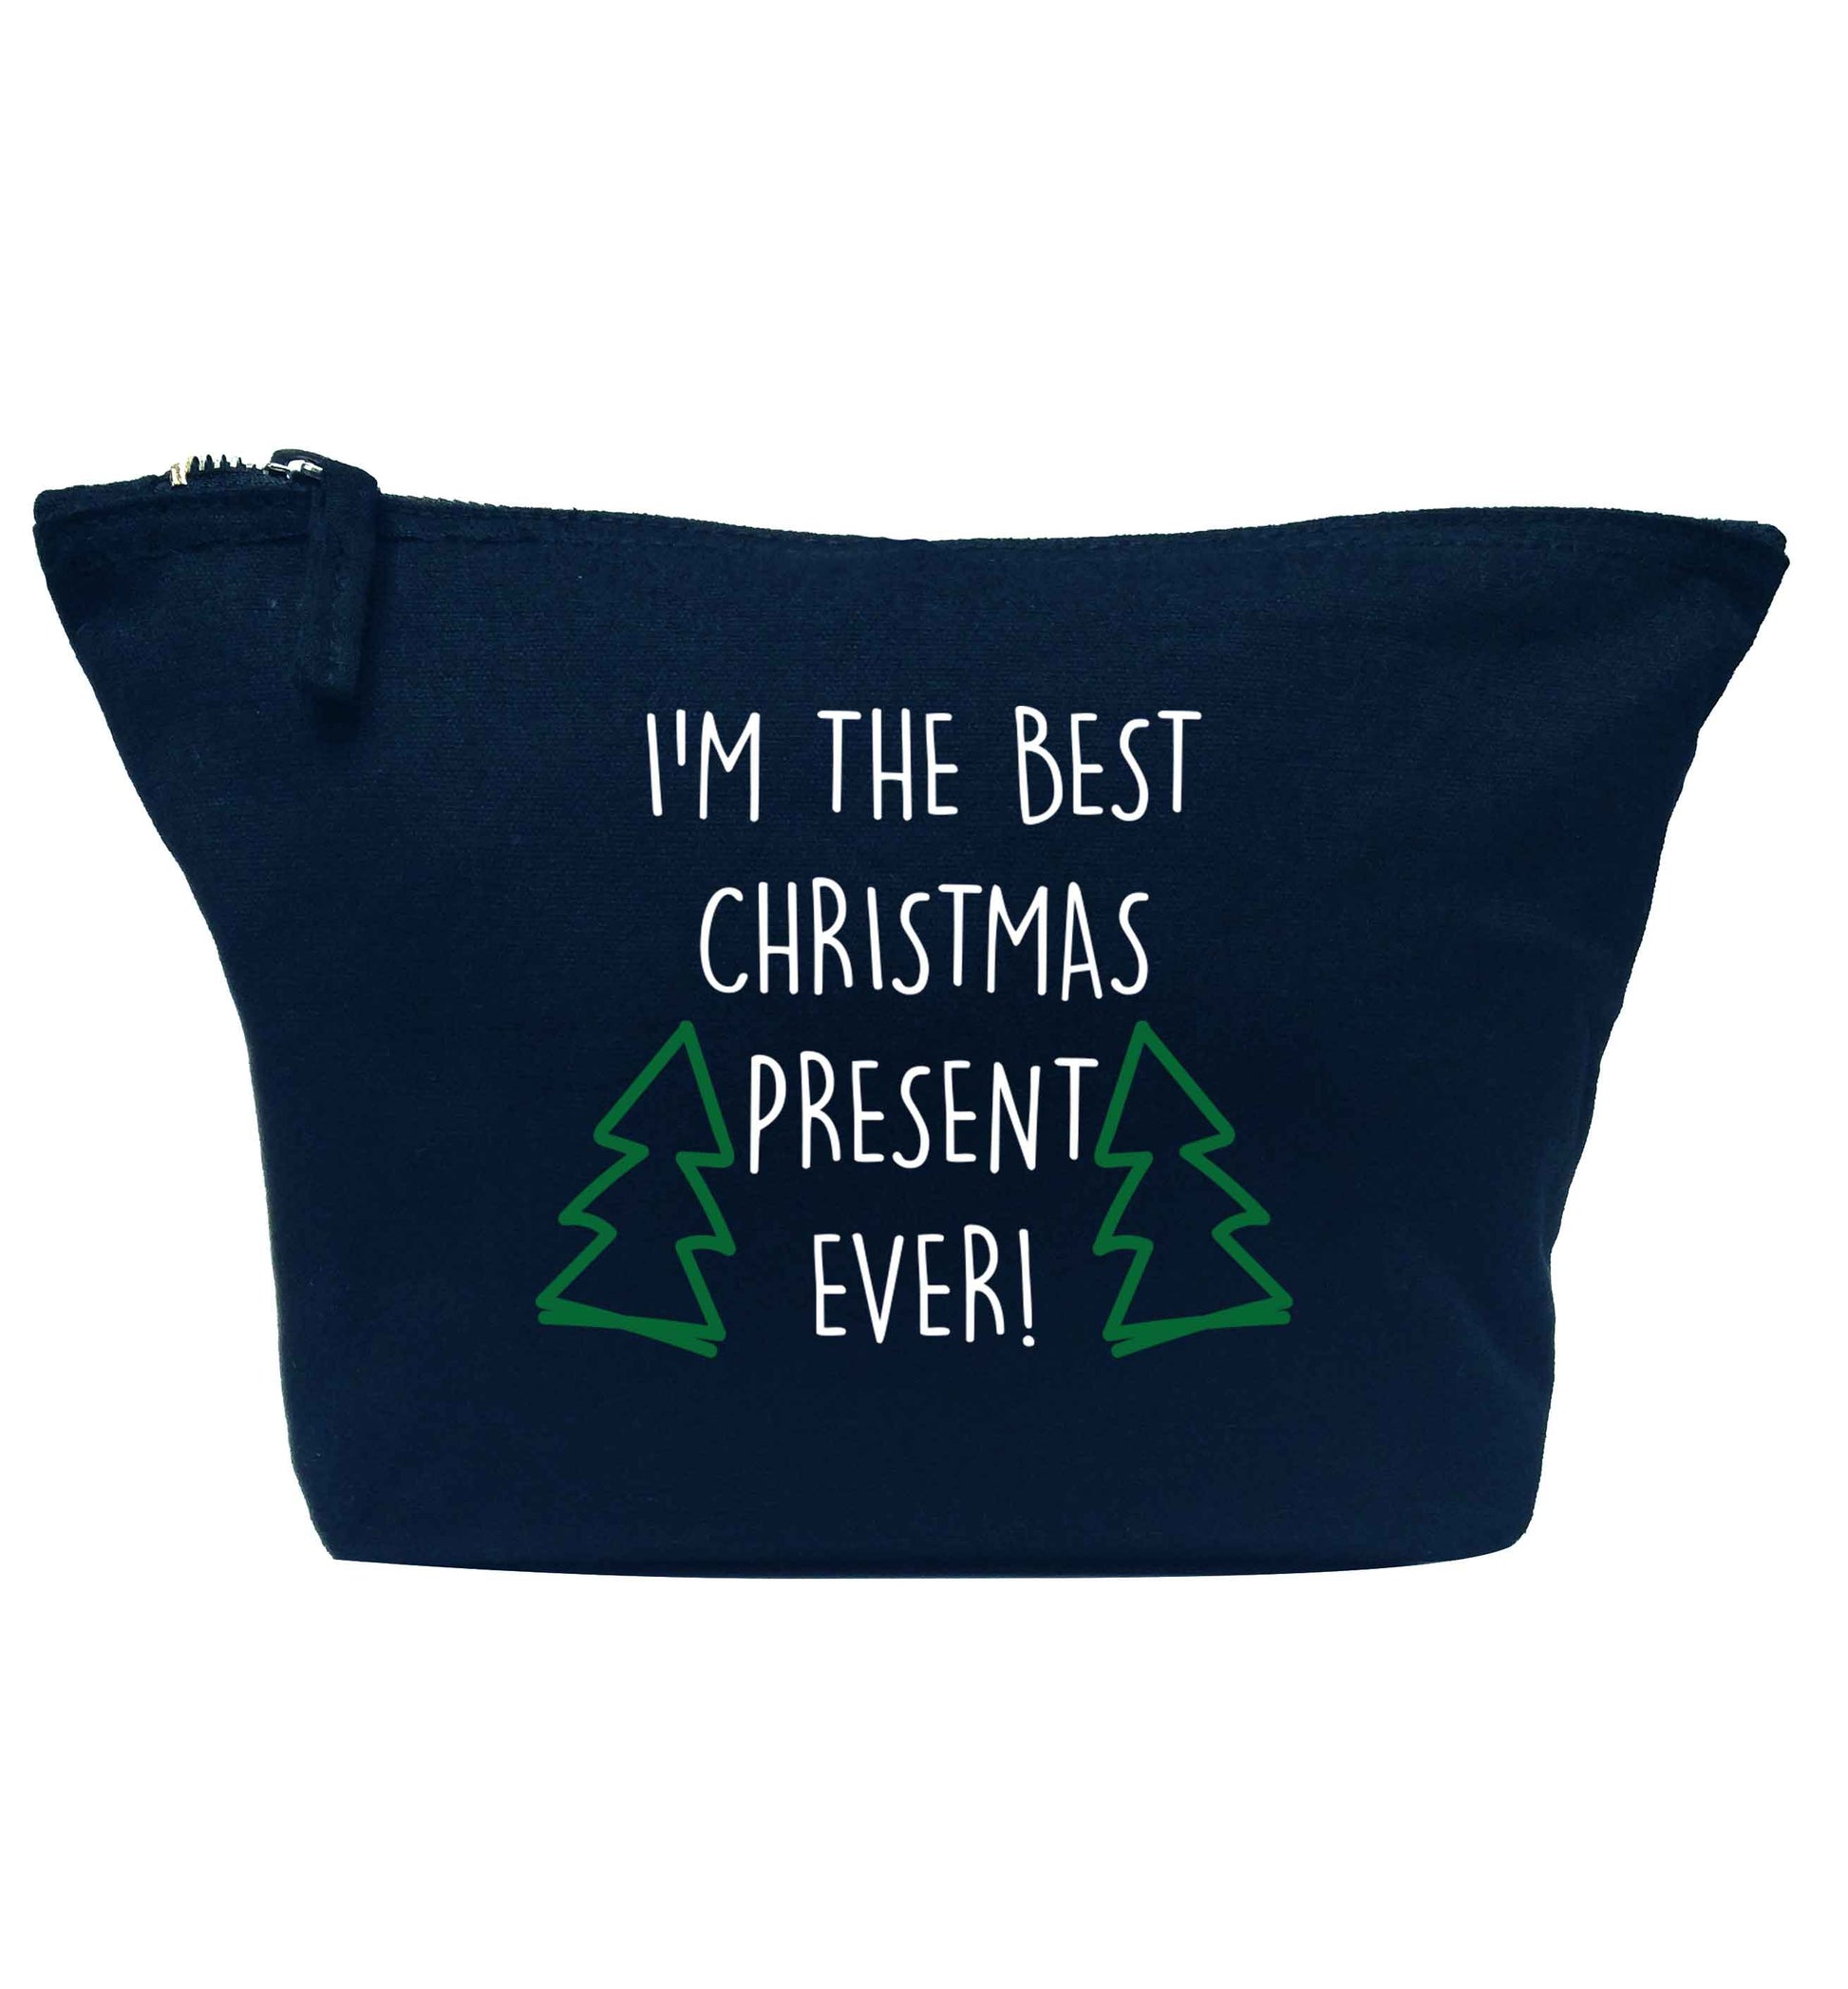 I'm the best Christmas present ever navy makeup bag